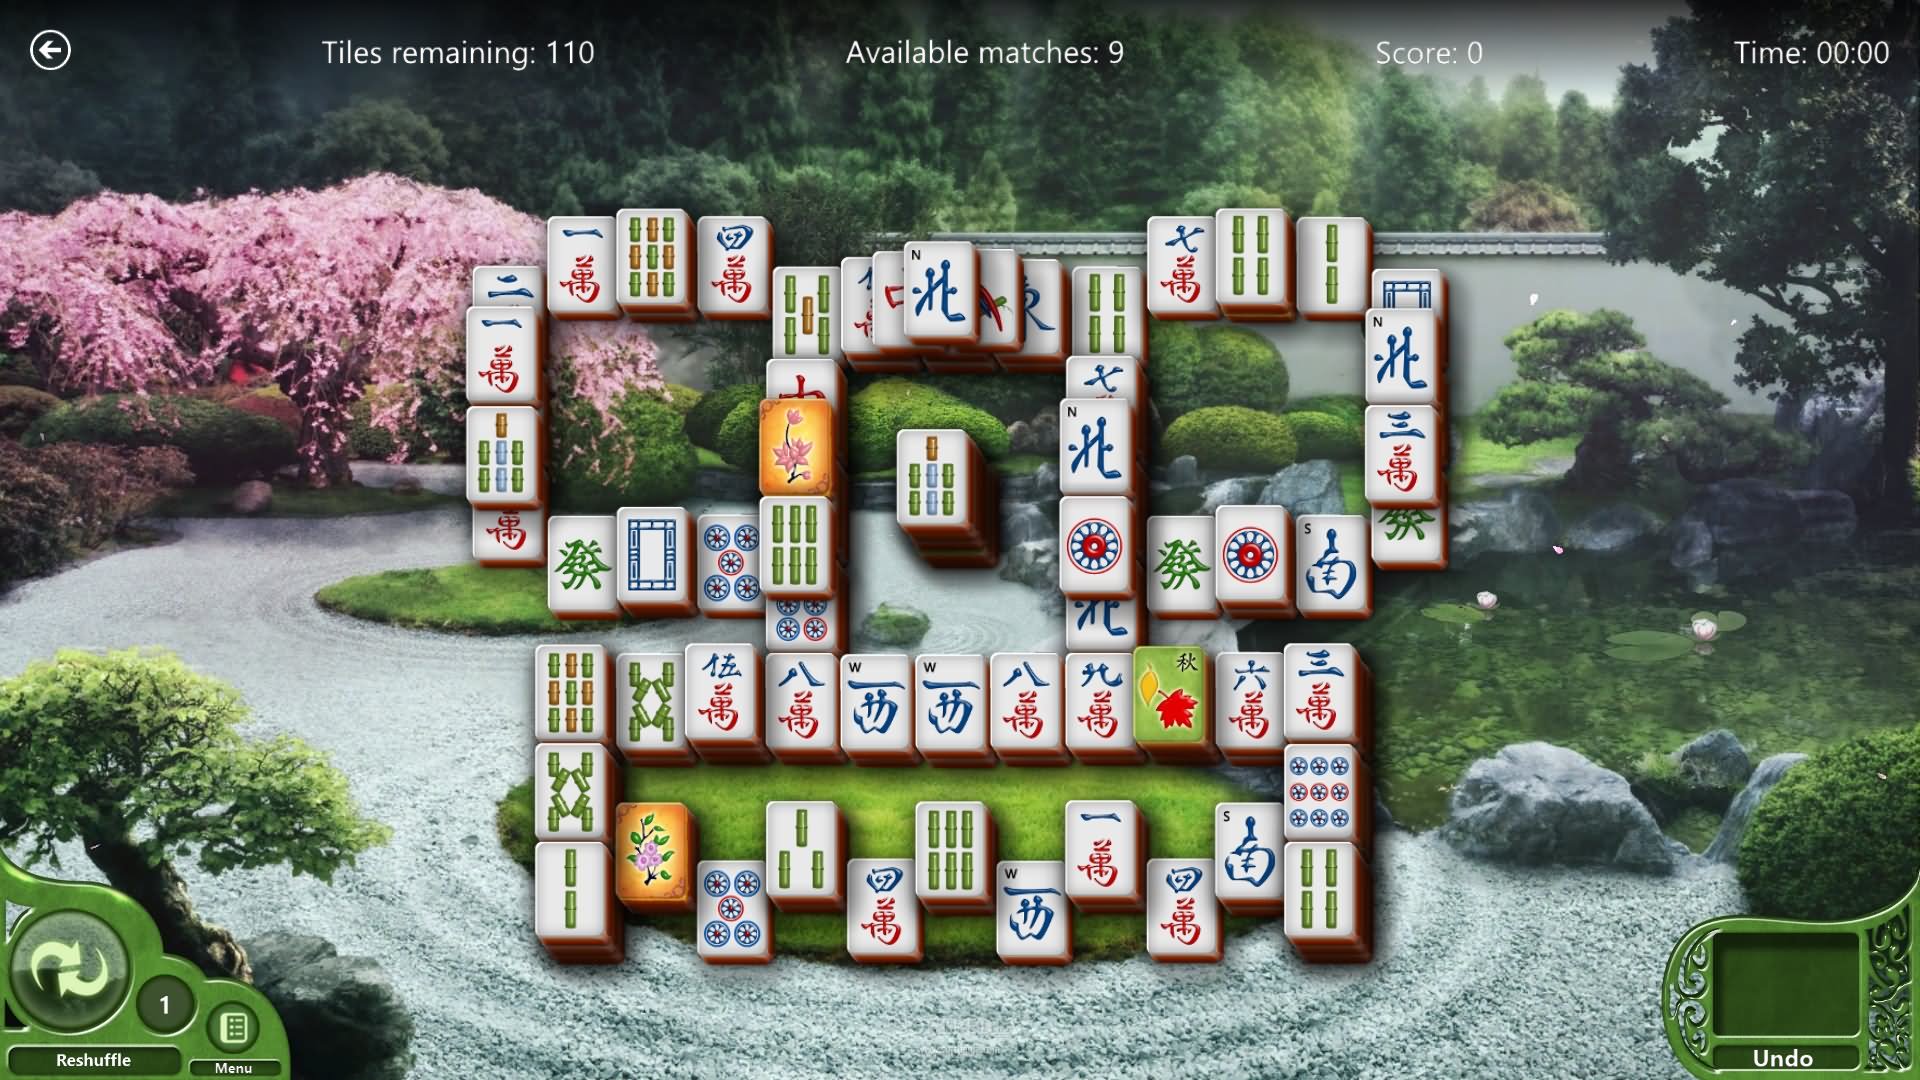 microsoft windows 10 mahjong: how i reset the stats?